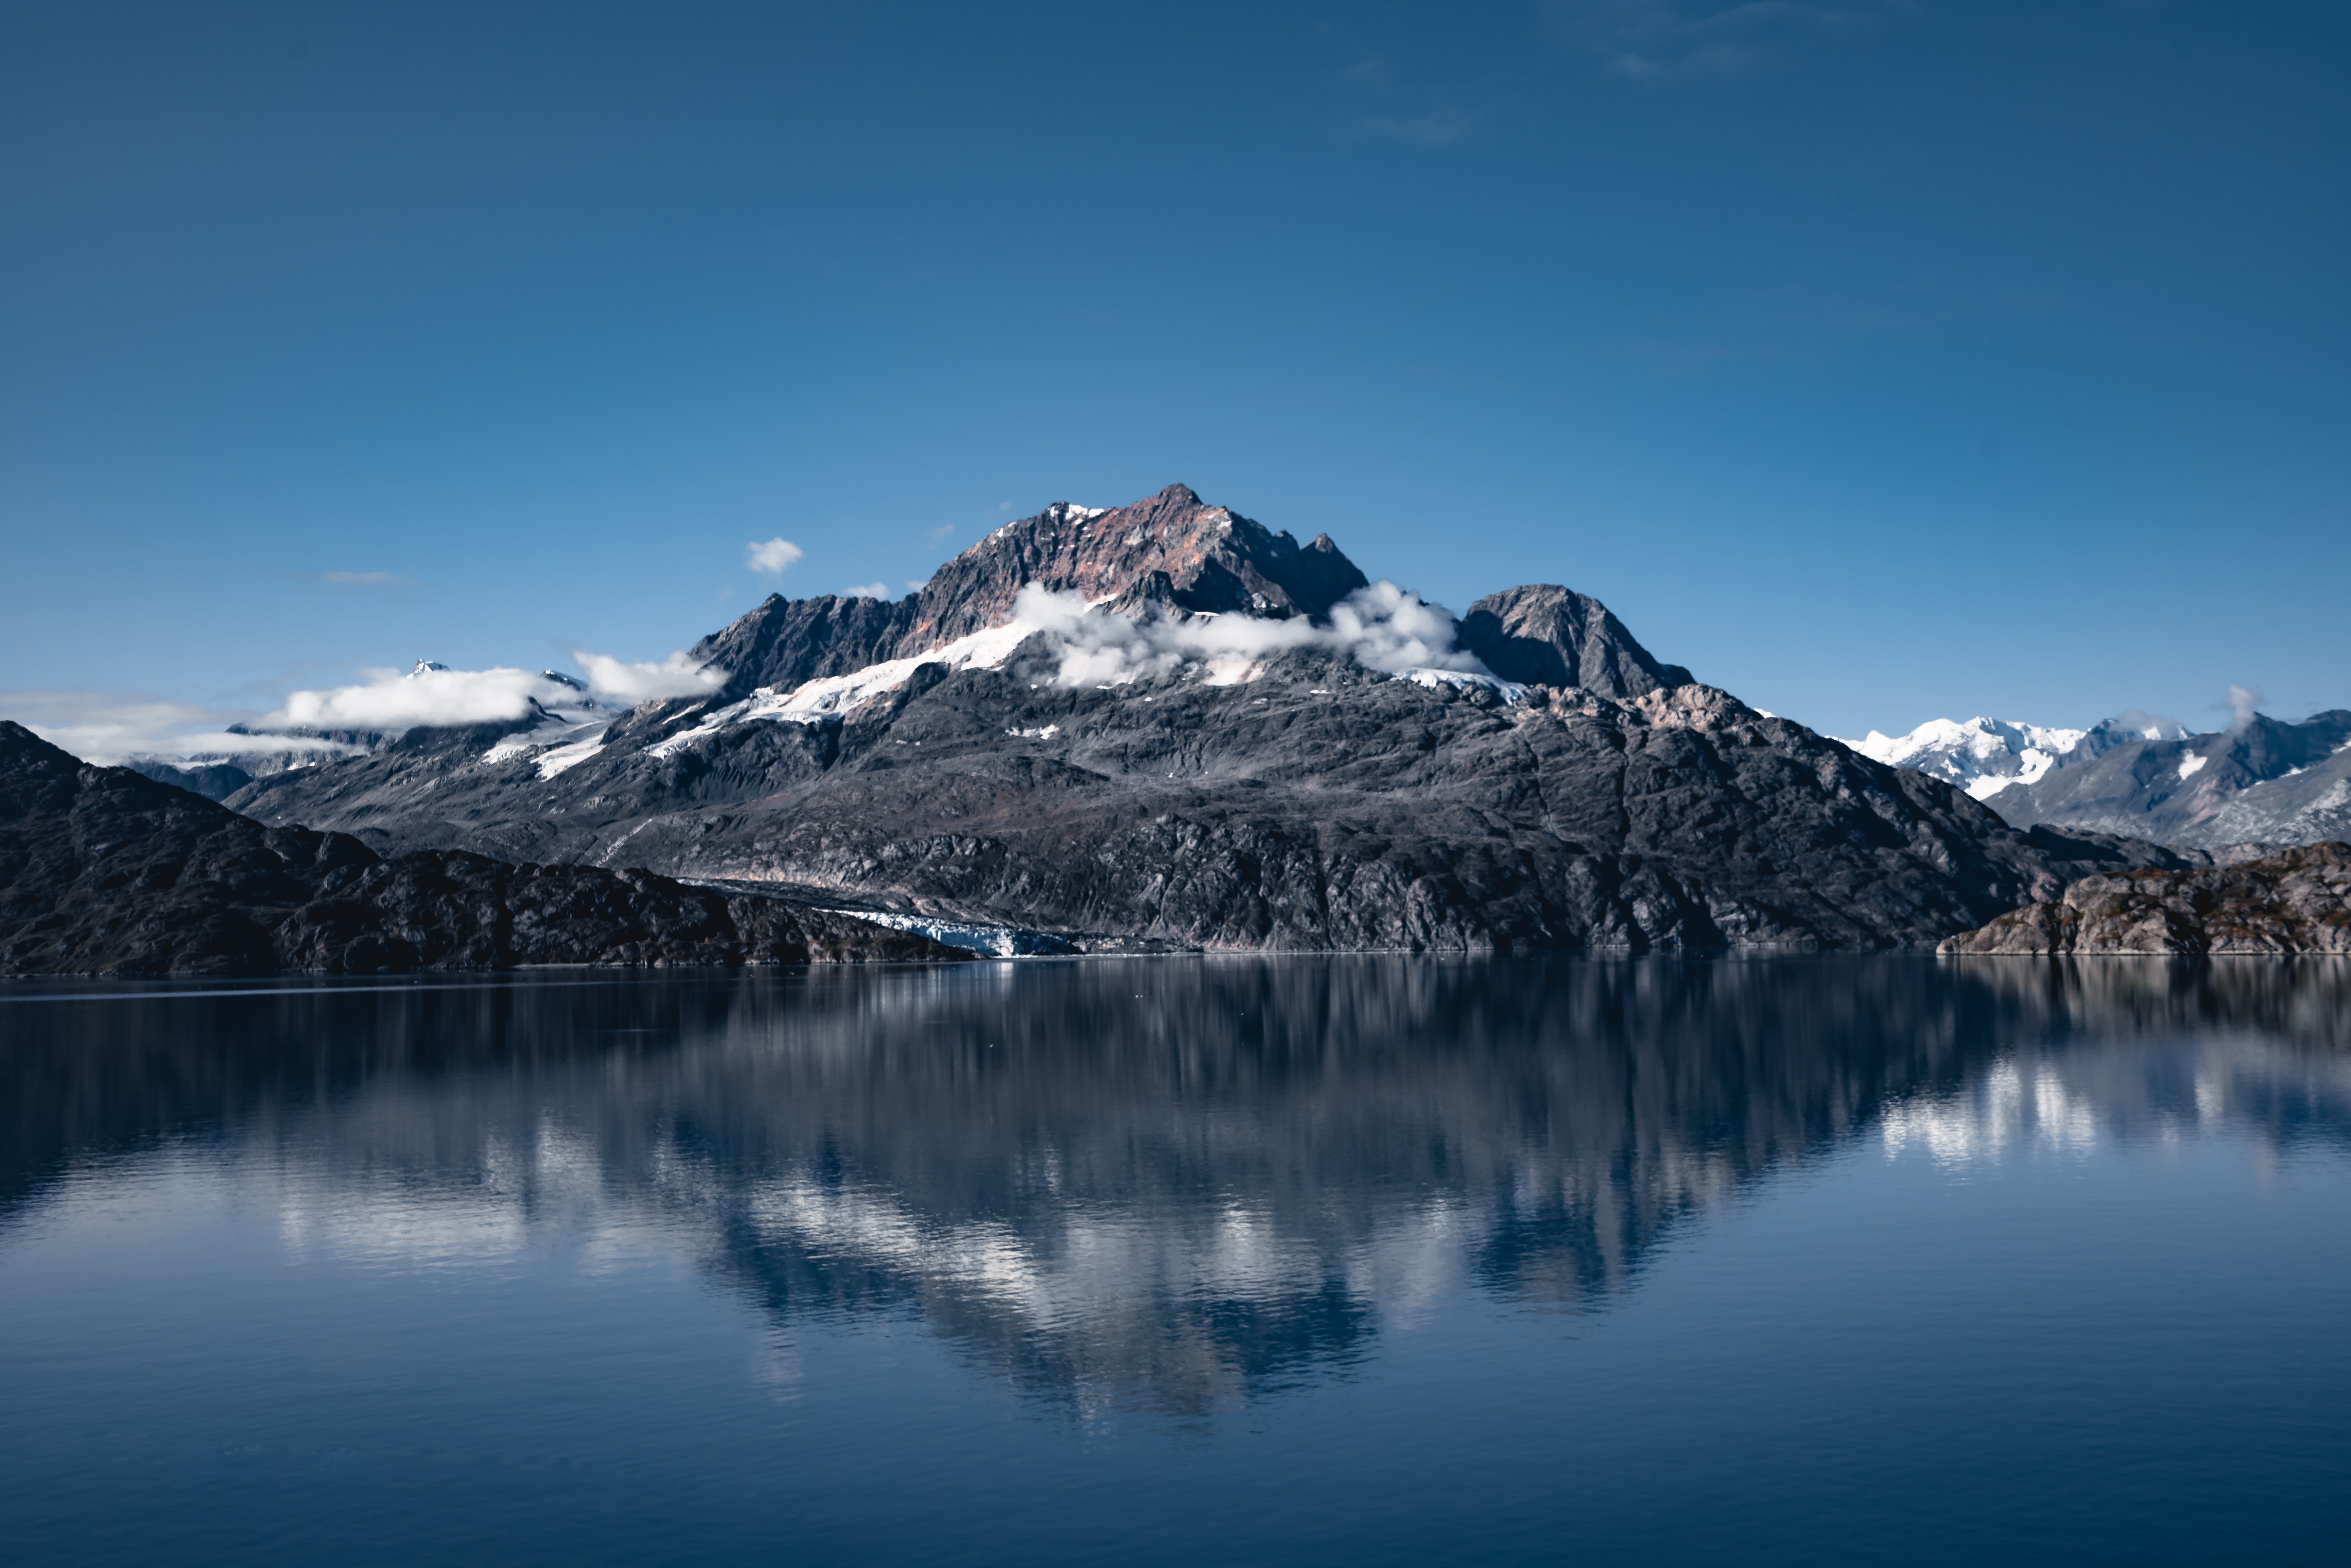 HD wallpaper, Mountain Range, 5K, Clear Sky, Landscape, Body Of Water, Famous Place, Reflection, Alaska, Mount Copper, Lamplugh Glacier, Glacier Bay National Park, 8K